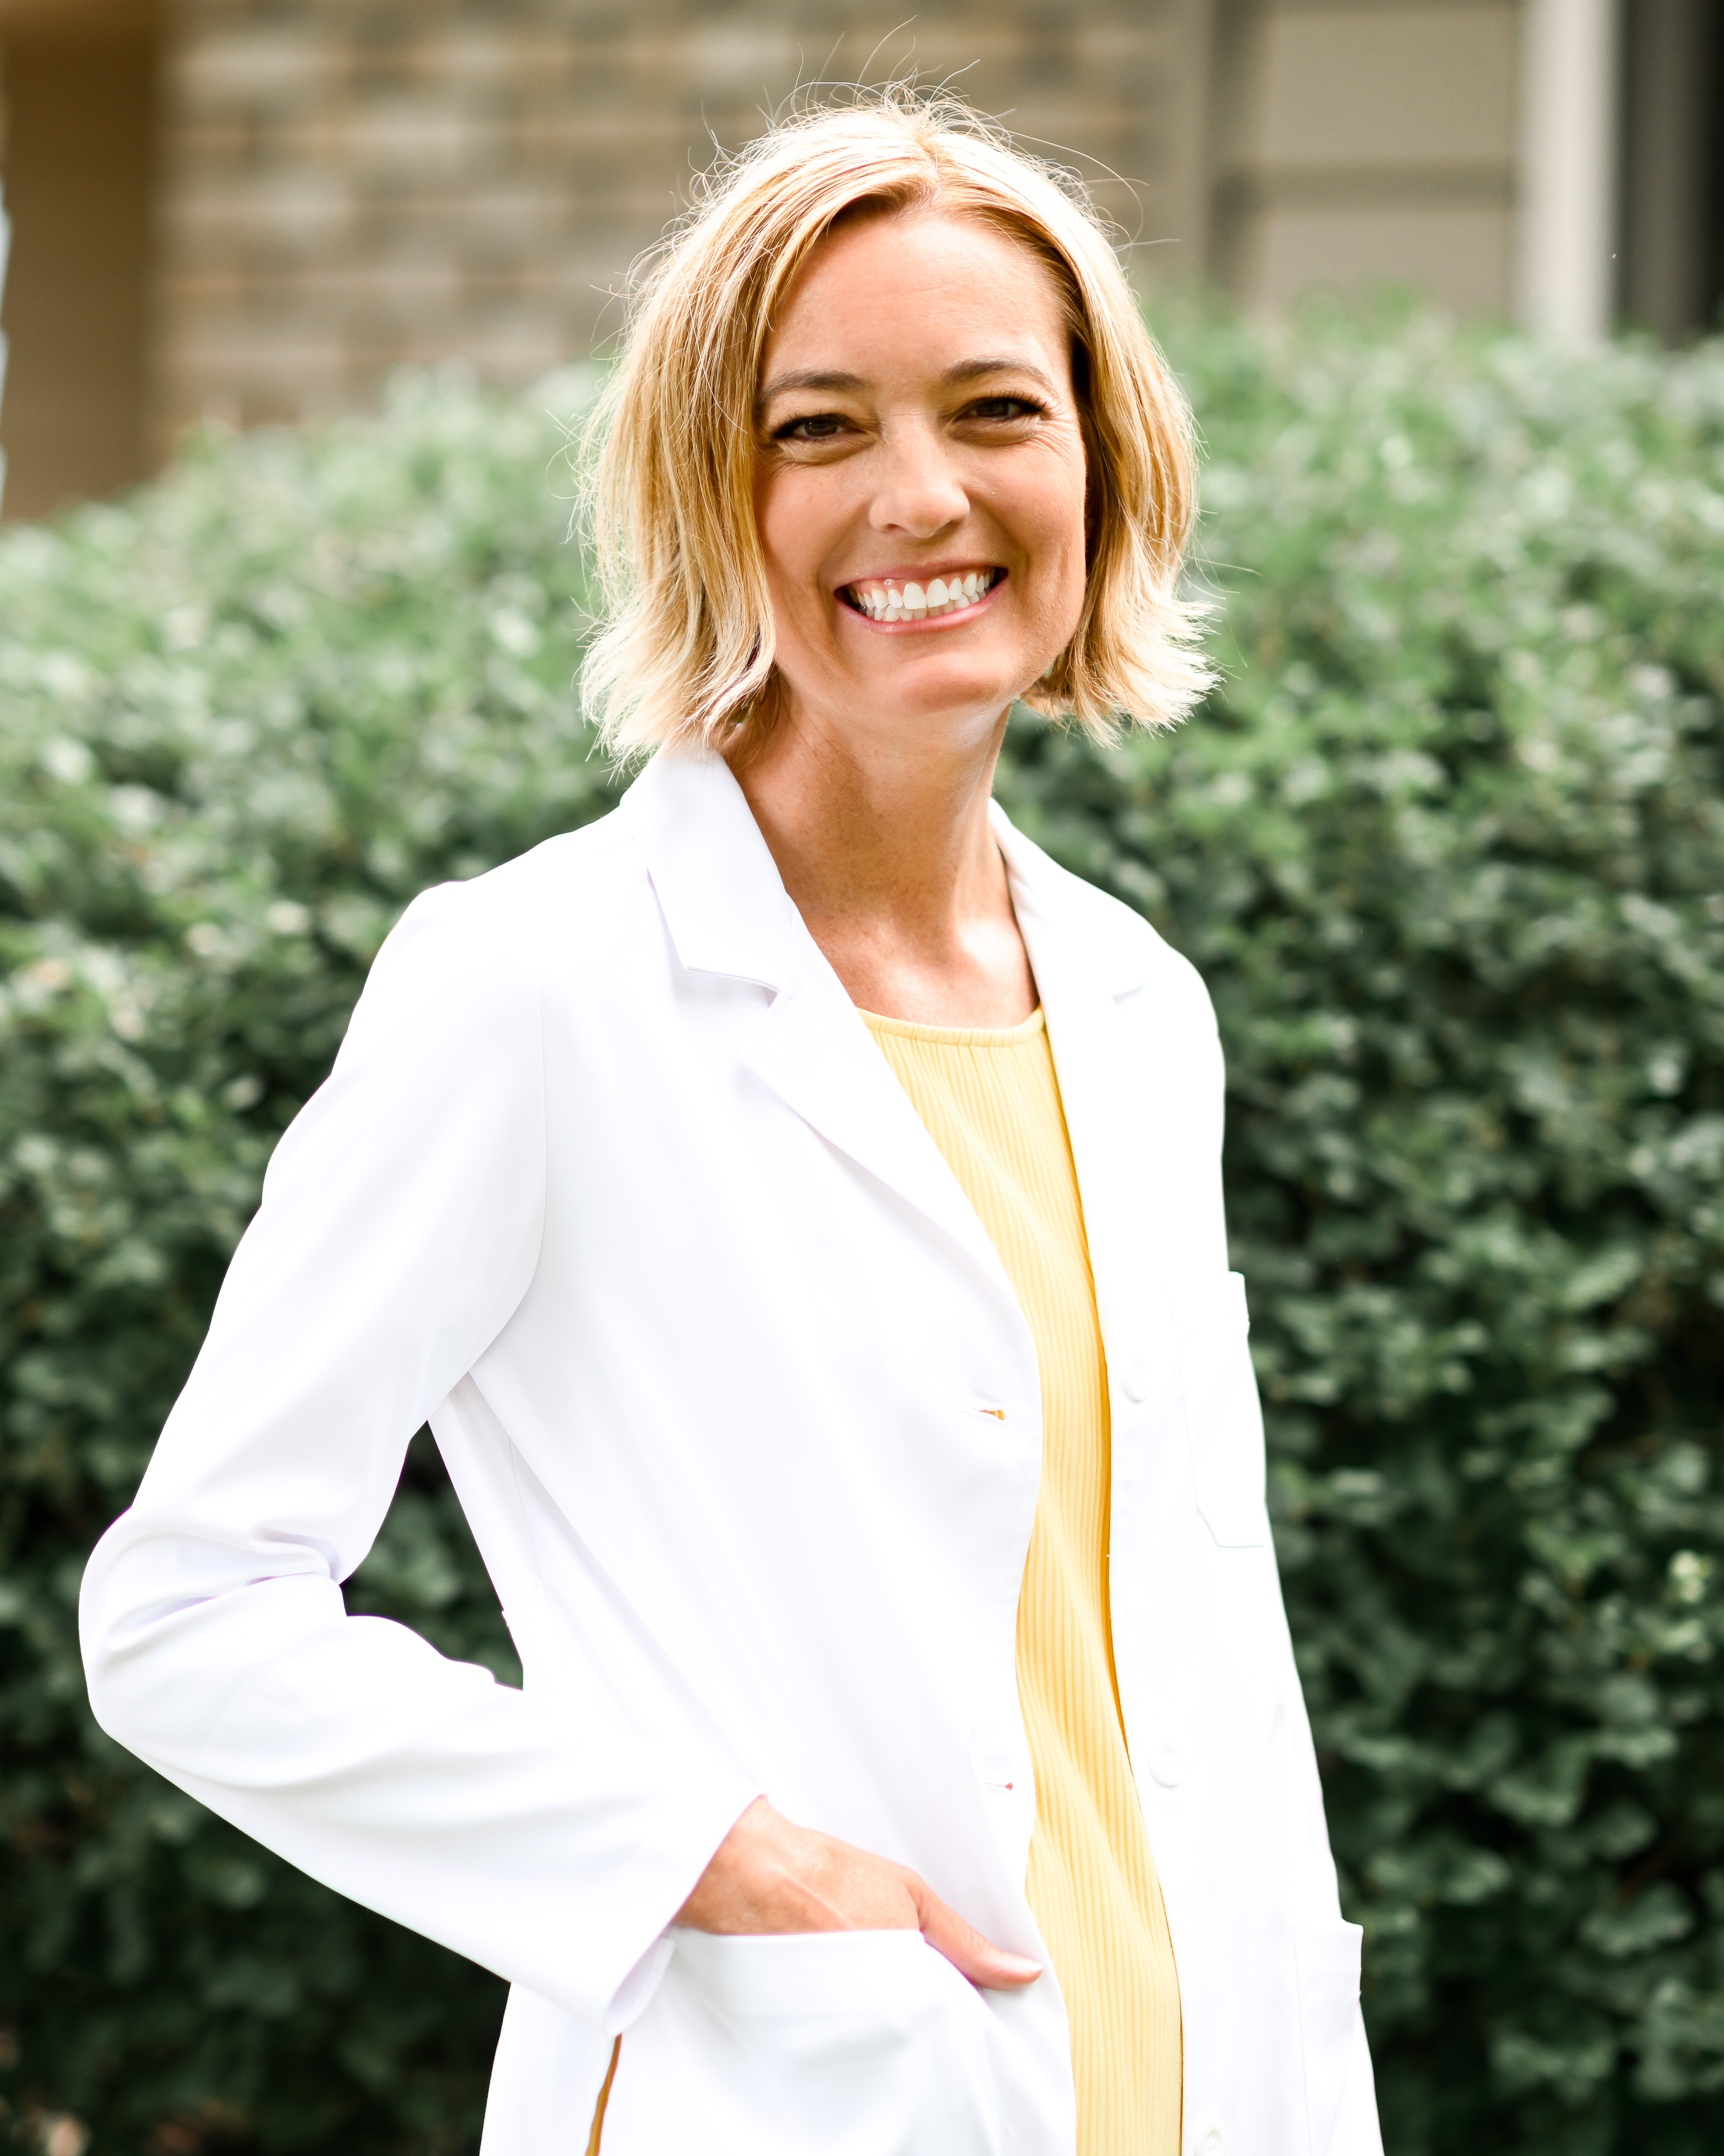 Pediatric dentist Dr. Katie Galm